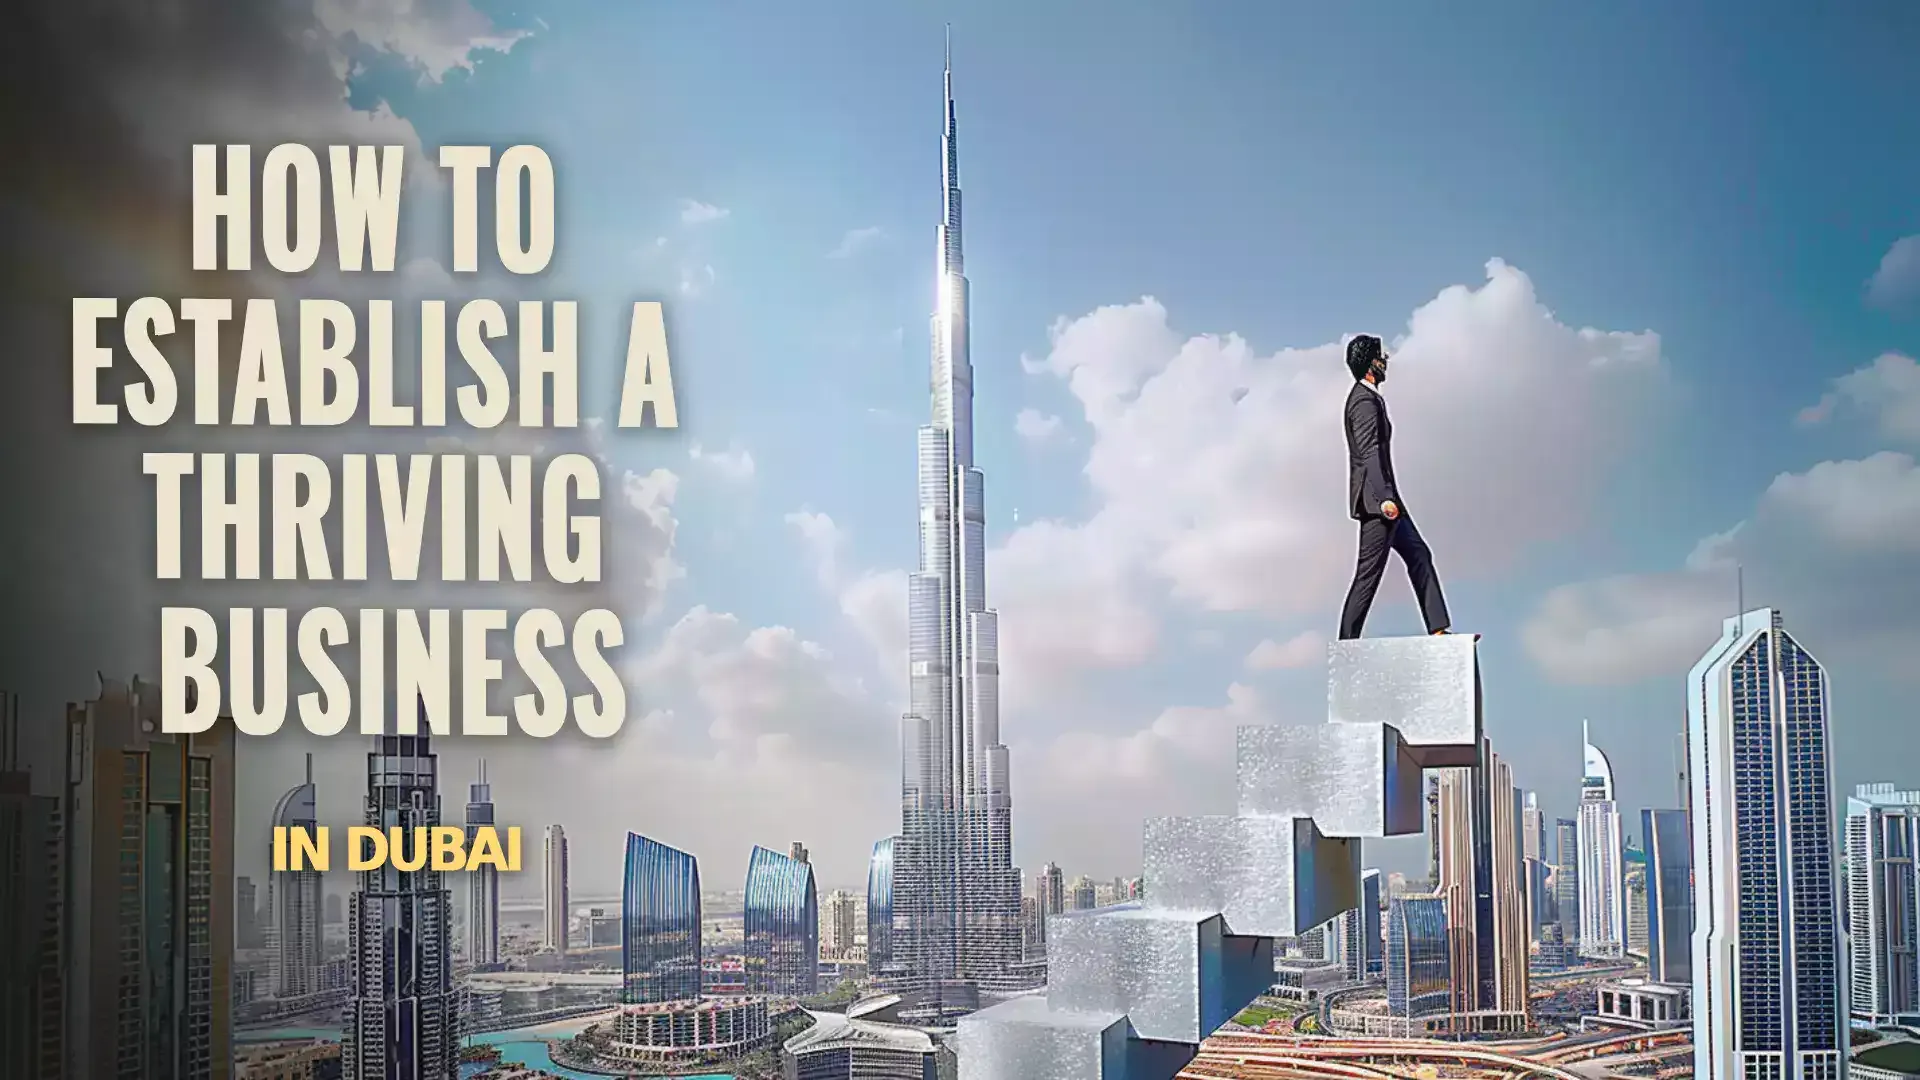 Image illustrating the vibrant business environment in Dubai